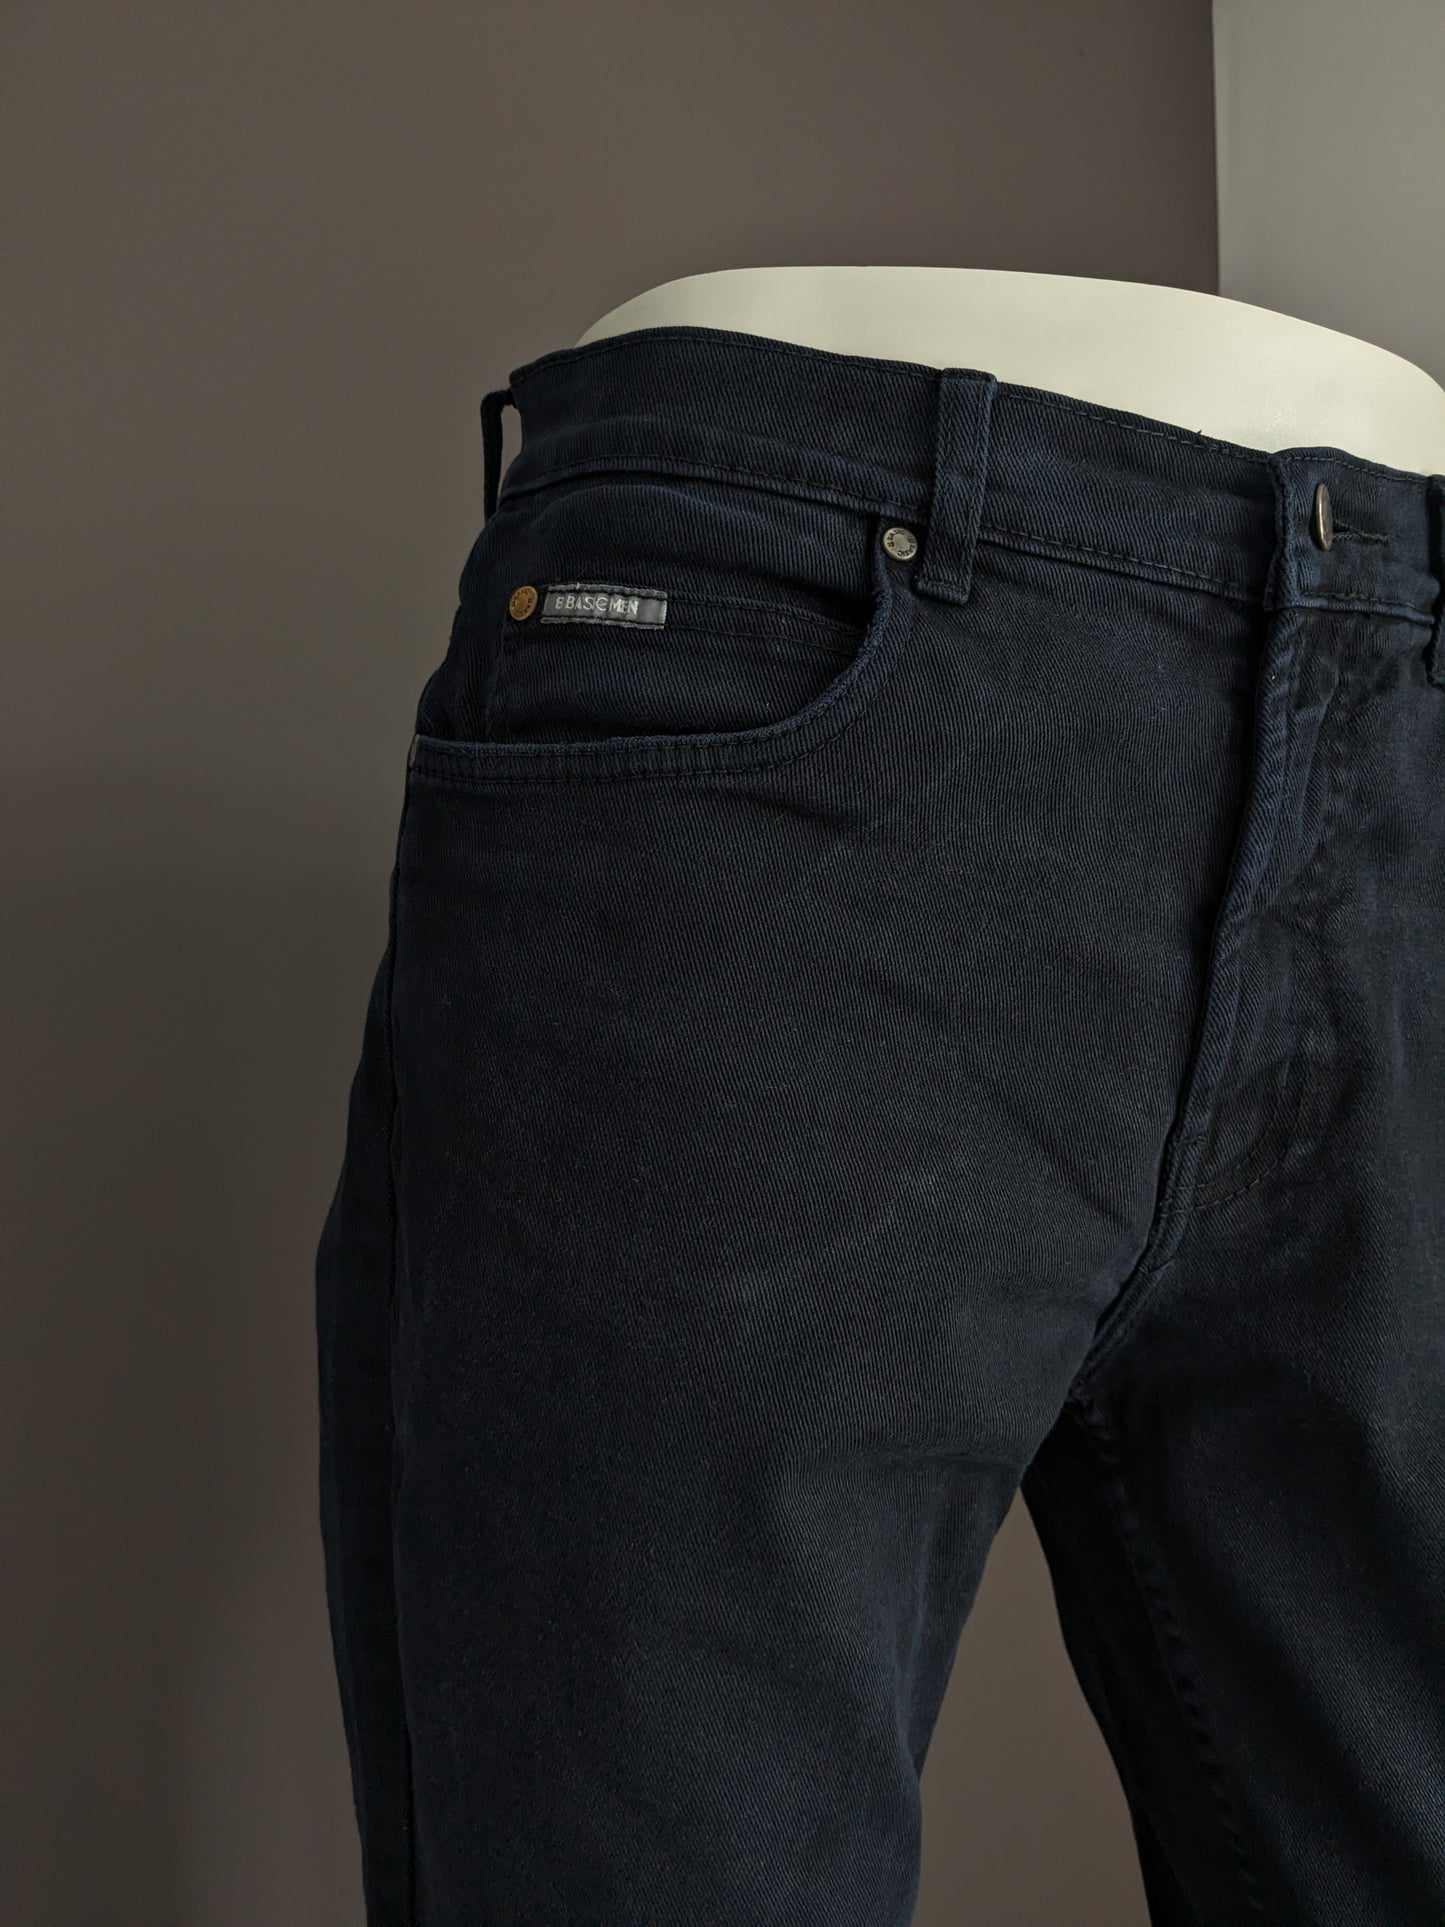 B Basic by Brams Paris Jeans. Black colored. Size W34 - L34. Comfort fit. stretch.